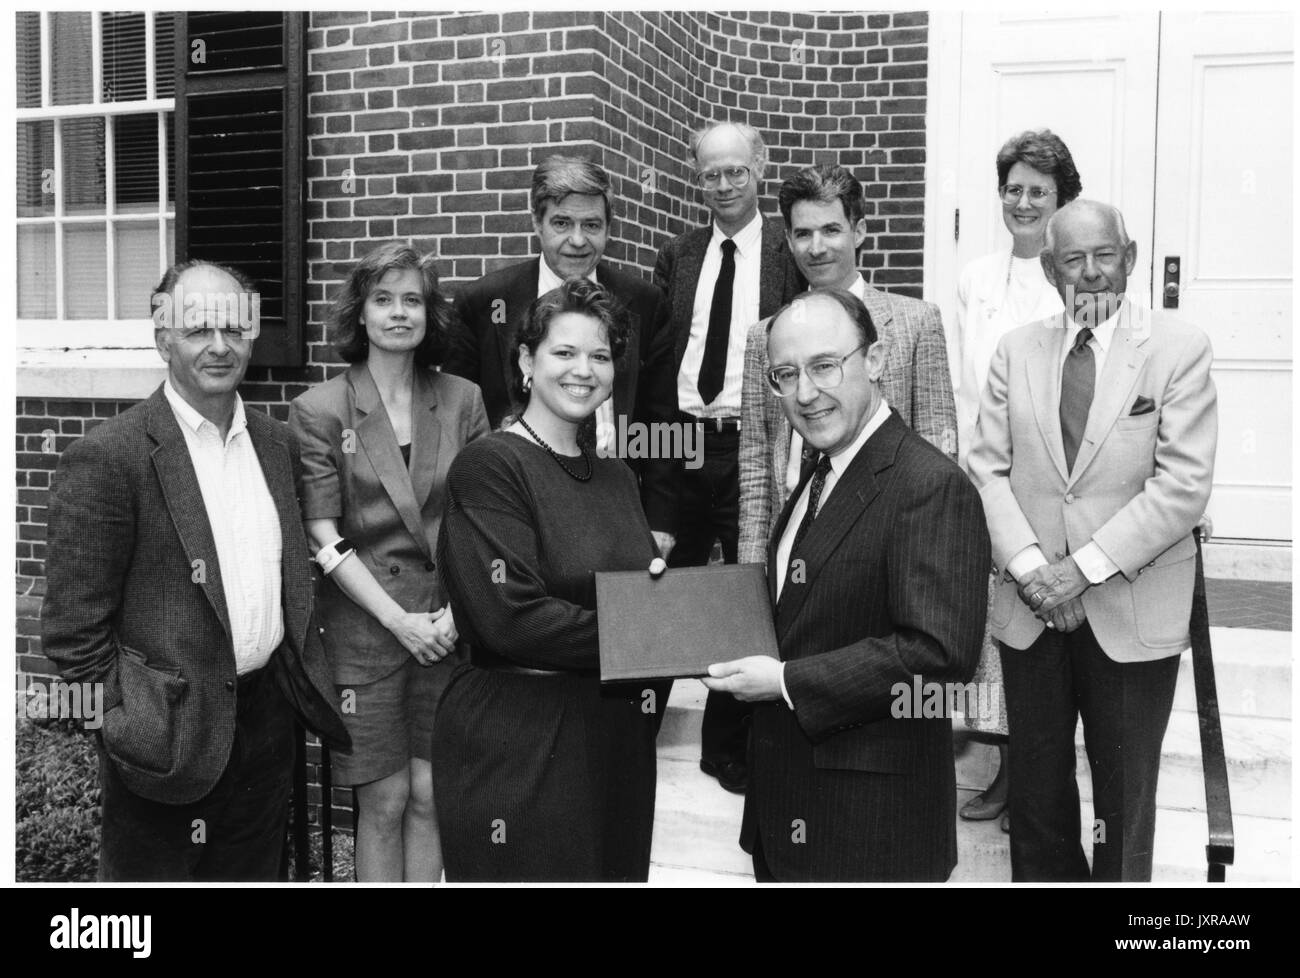 Sudler Prize, Celestia Ward, William C Richardson, Sudler Arts Prize Committee Portait, Celestia Ward receiving the Sudler Prize from William C Richardson, 1994. Stock Photo